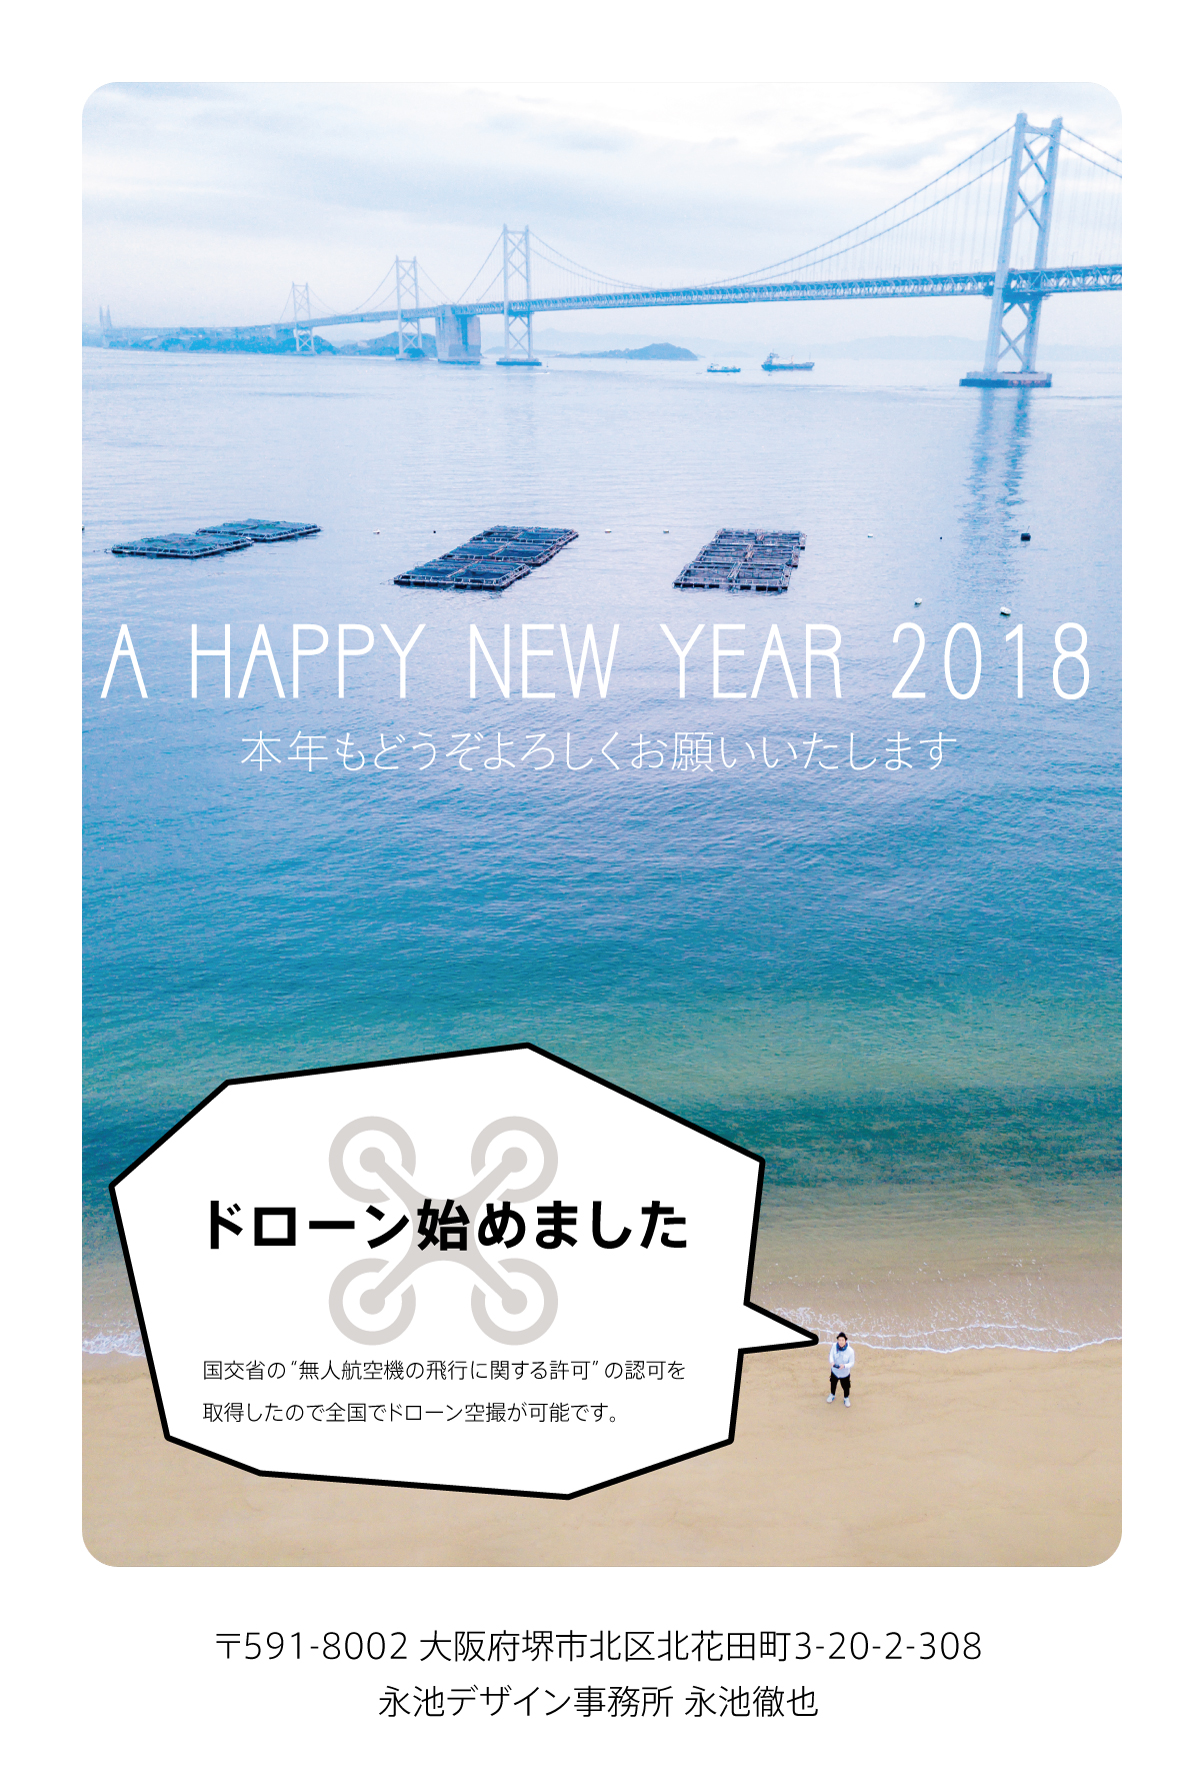 HAPPY NEW YEAR 2018